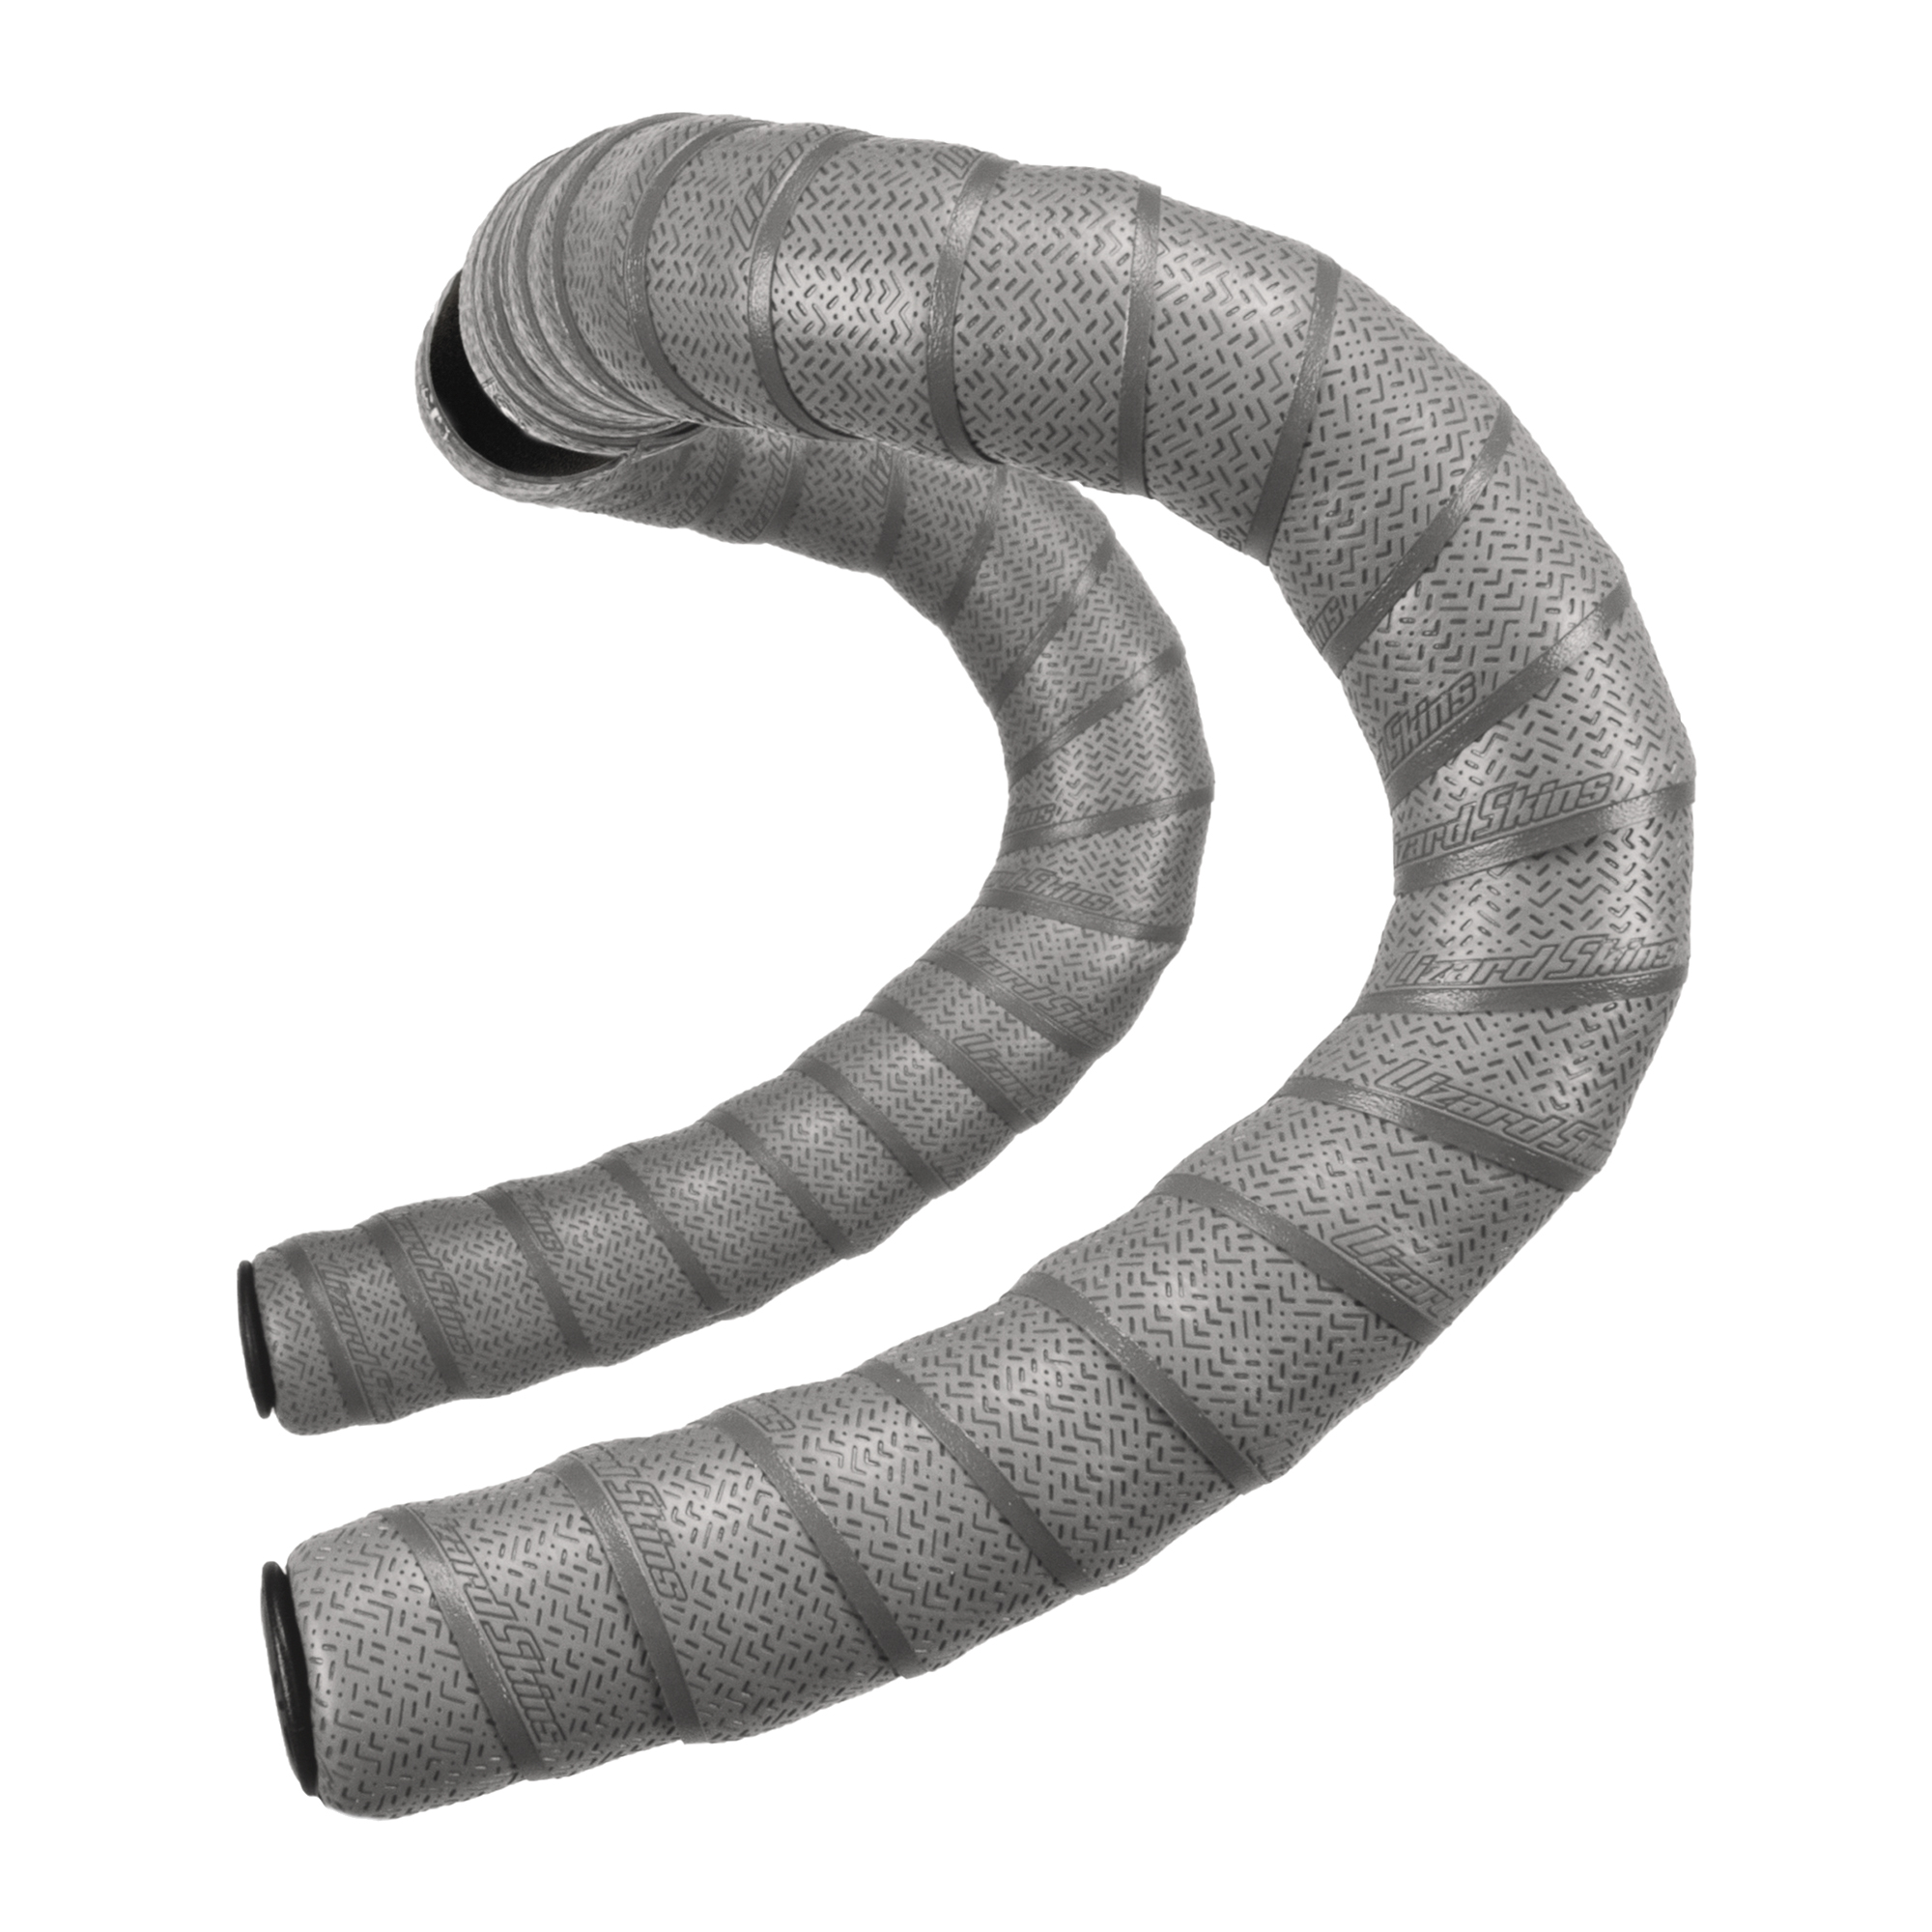 Обмотка руля Lizard Skins DSP V2, толщина 4,6мм, длина 2310мм, серая (Cool Gray) фото 